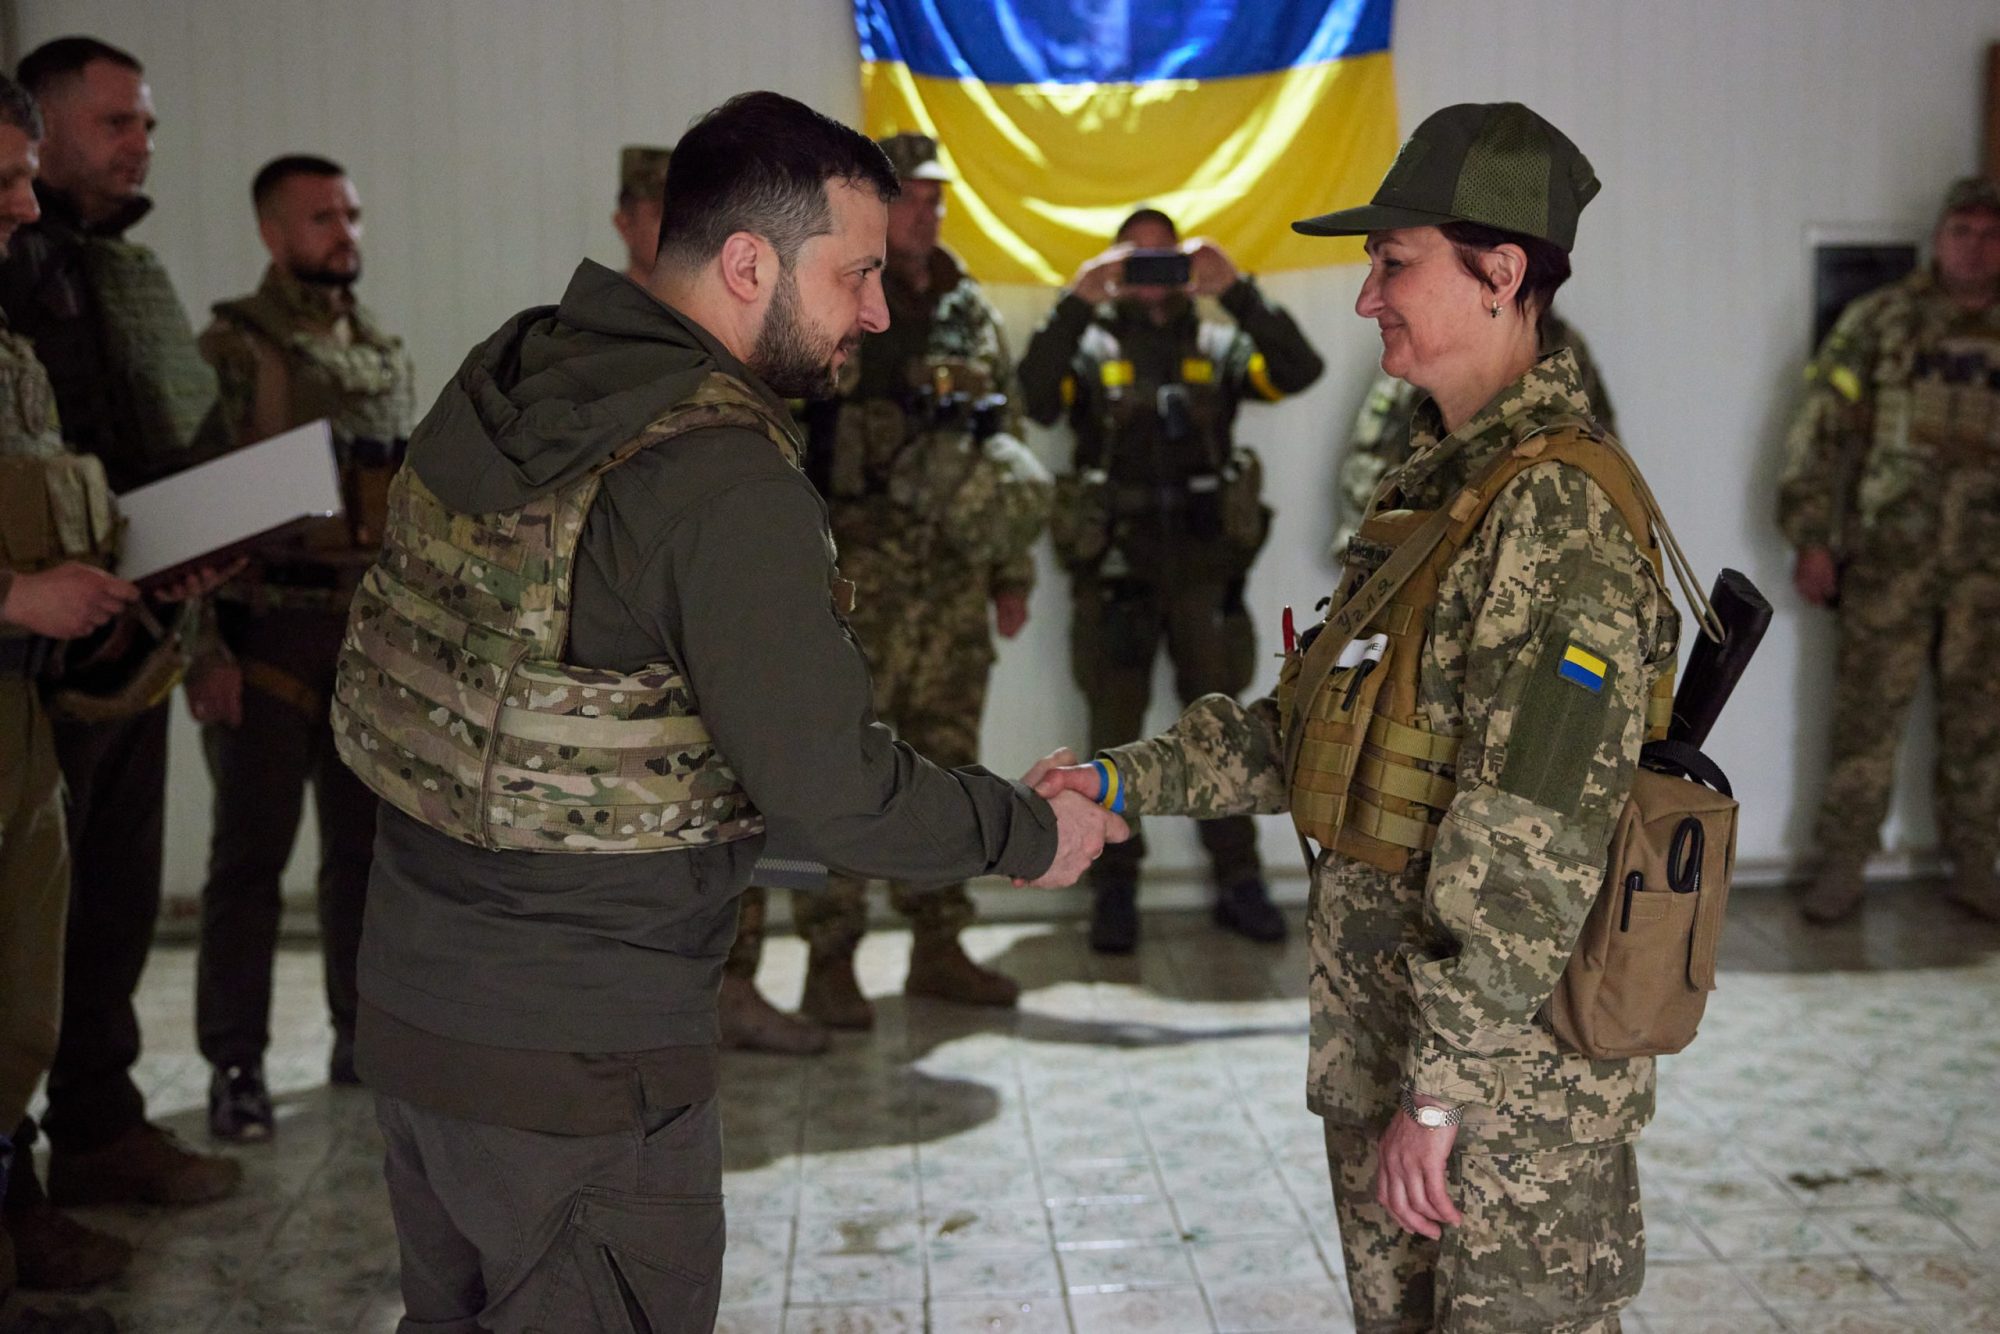 Women At War: Ukraine's Female Soldiers Dream Of Freedom, Fight